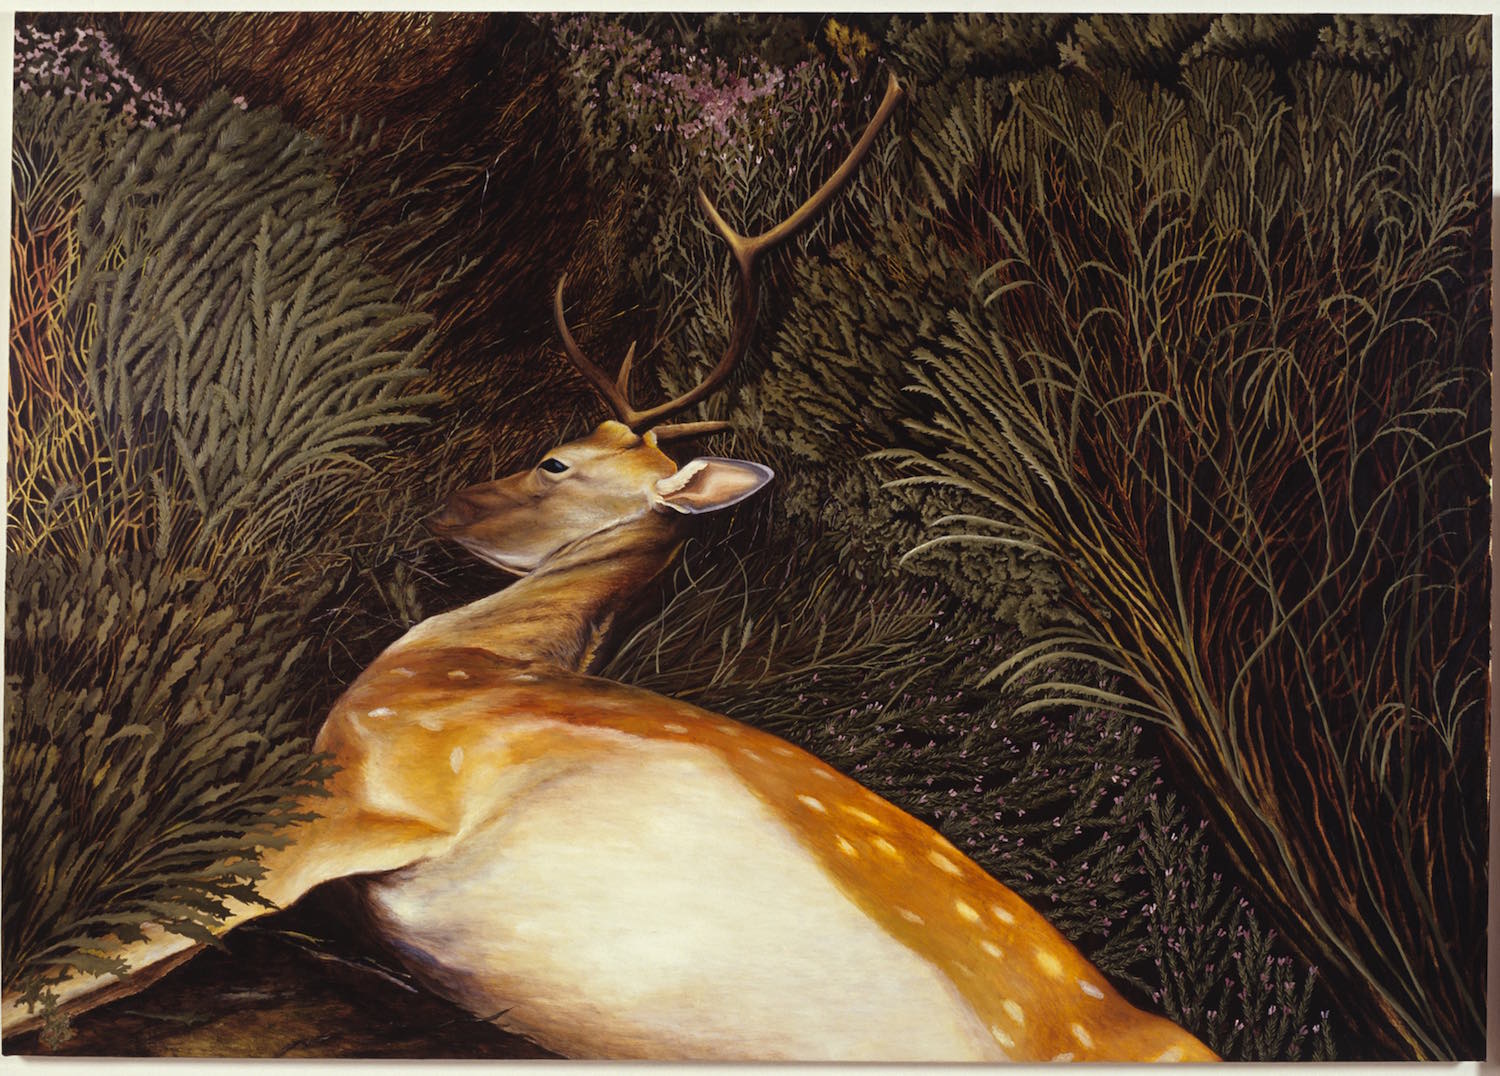   Bambi también muere   Óleo sobre lienzo&nbsp; &nbsp; &nbsp; &nbsp; &nbsp; &nbsp; &nbsp; &nbsp; 112 x 158 cm. 2001    